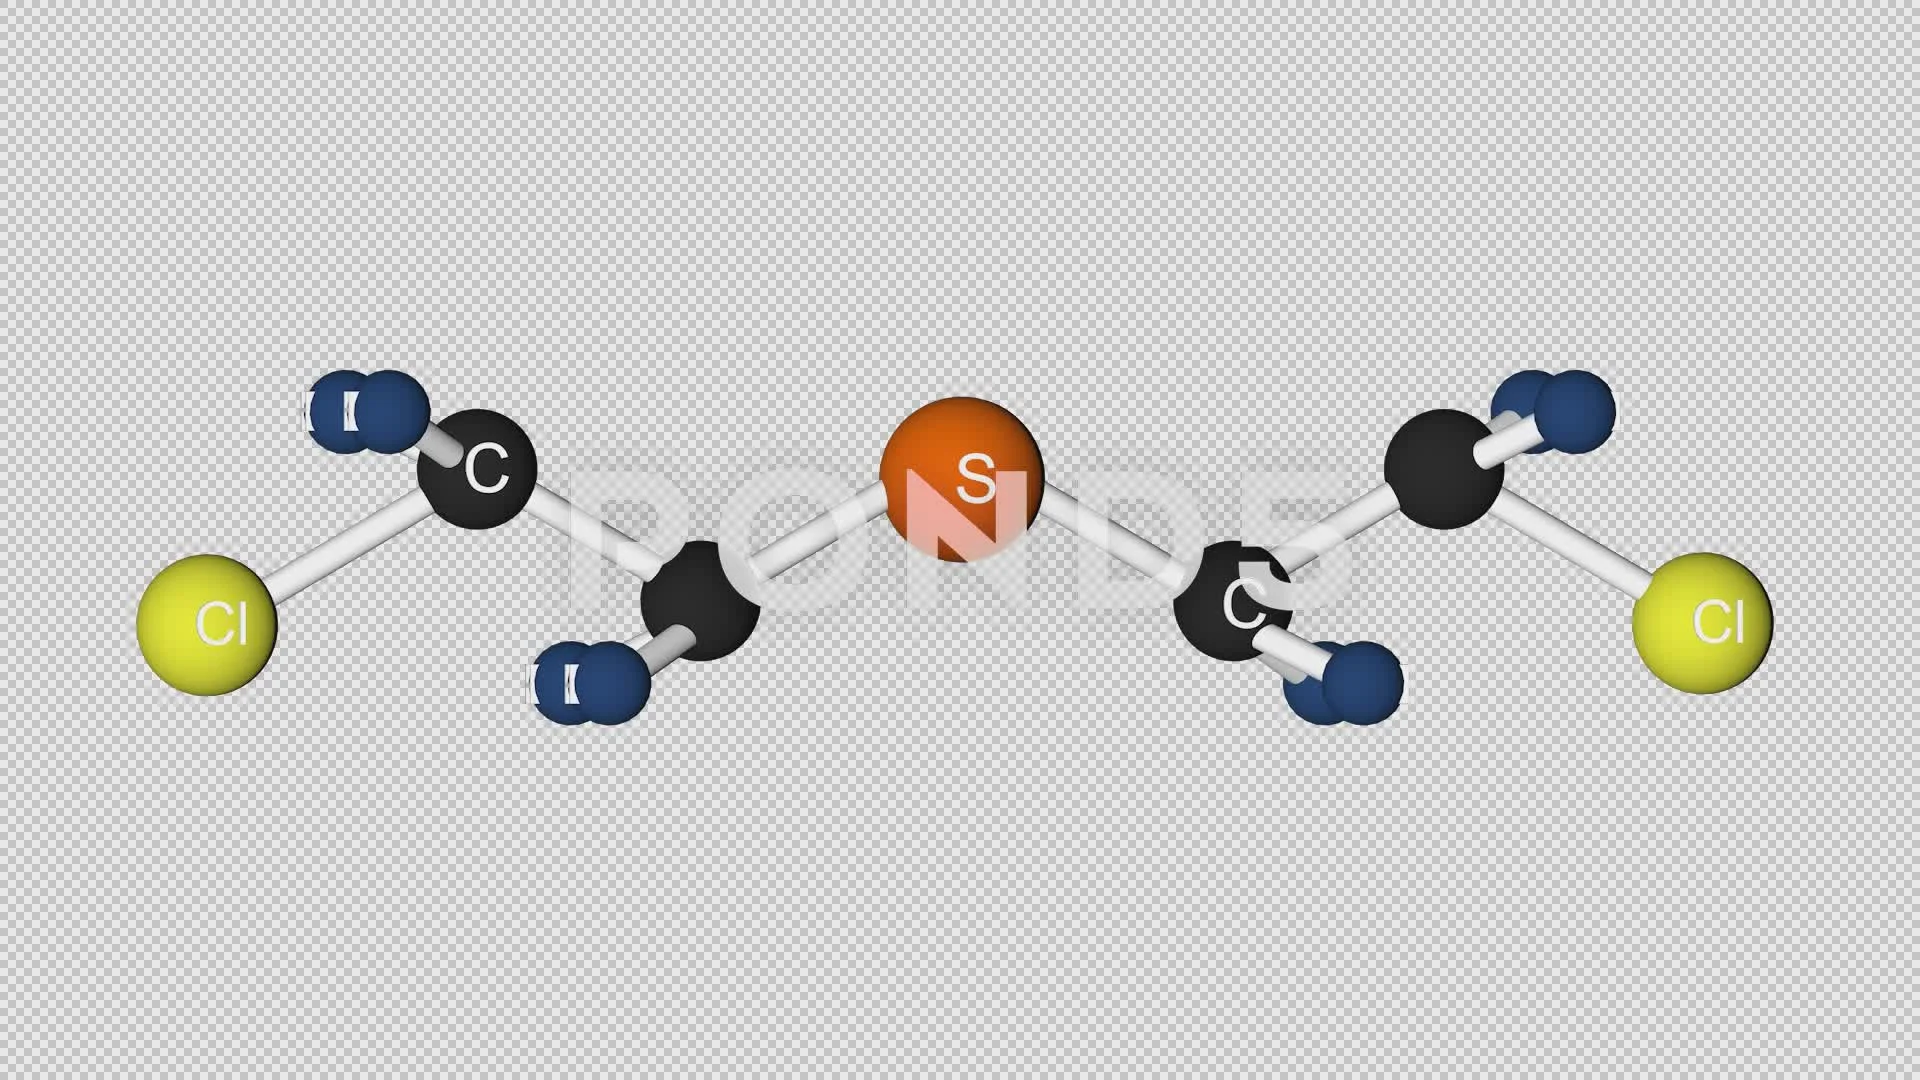 gas molecules structure